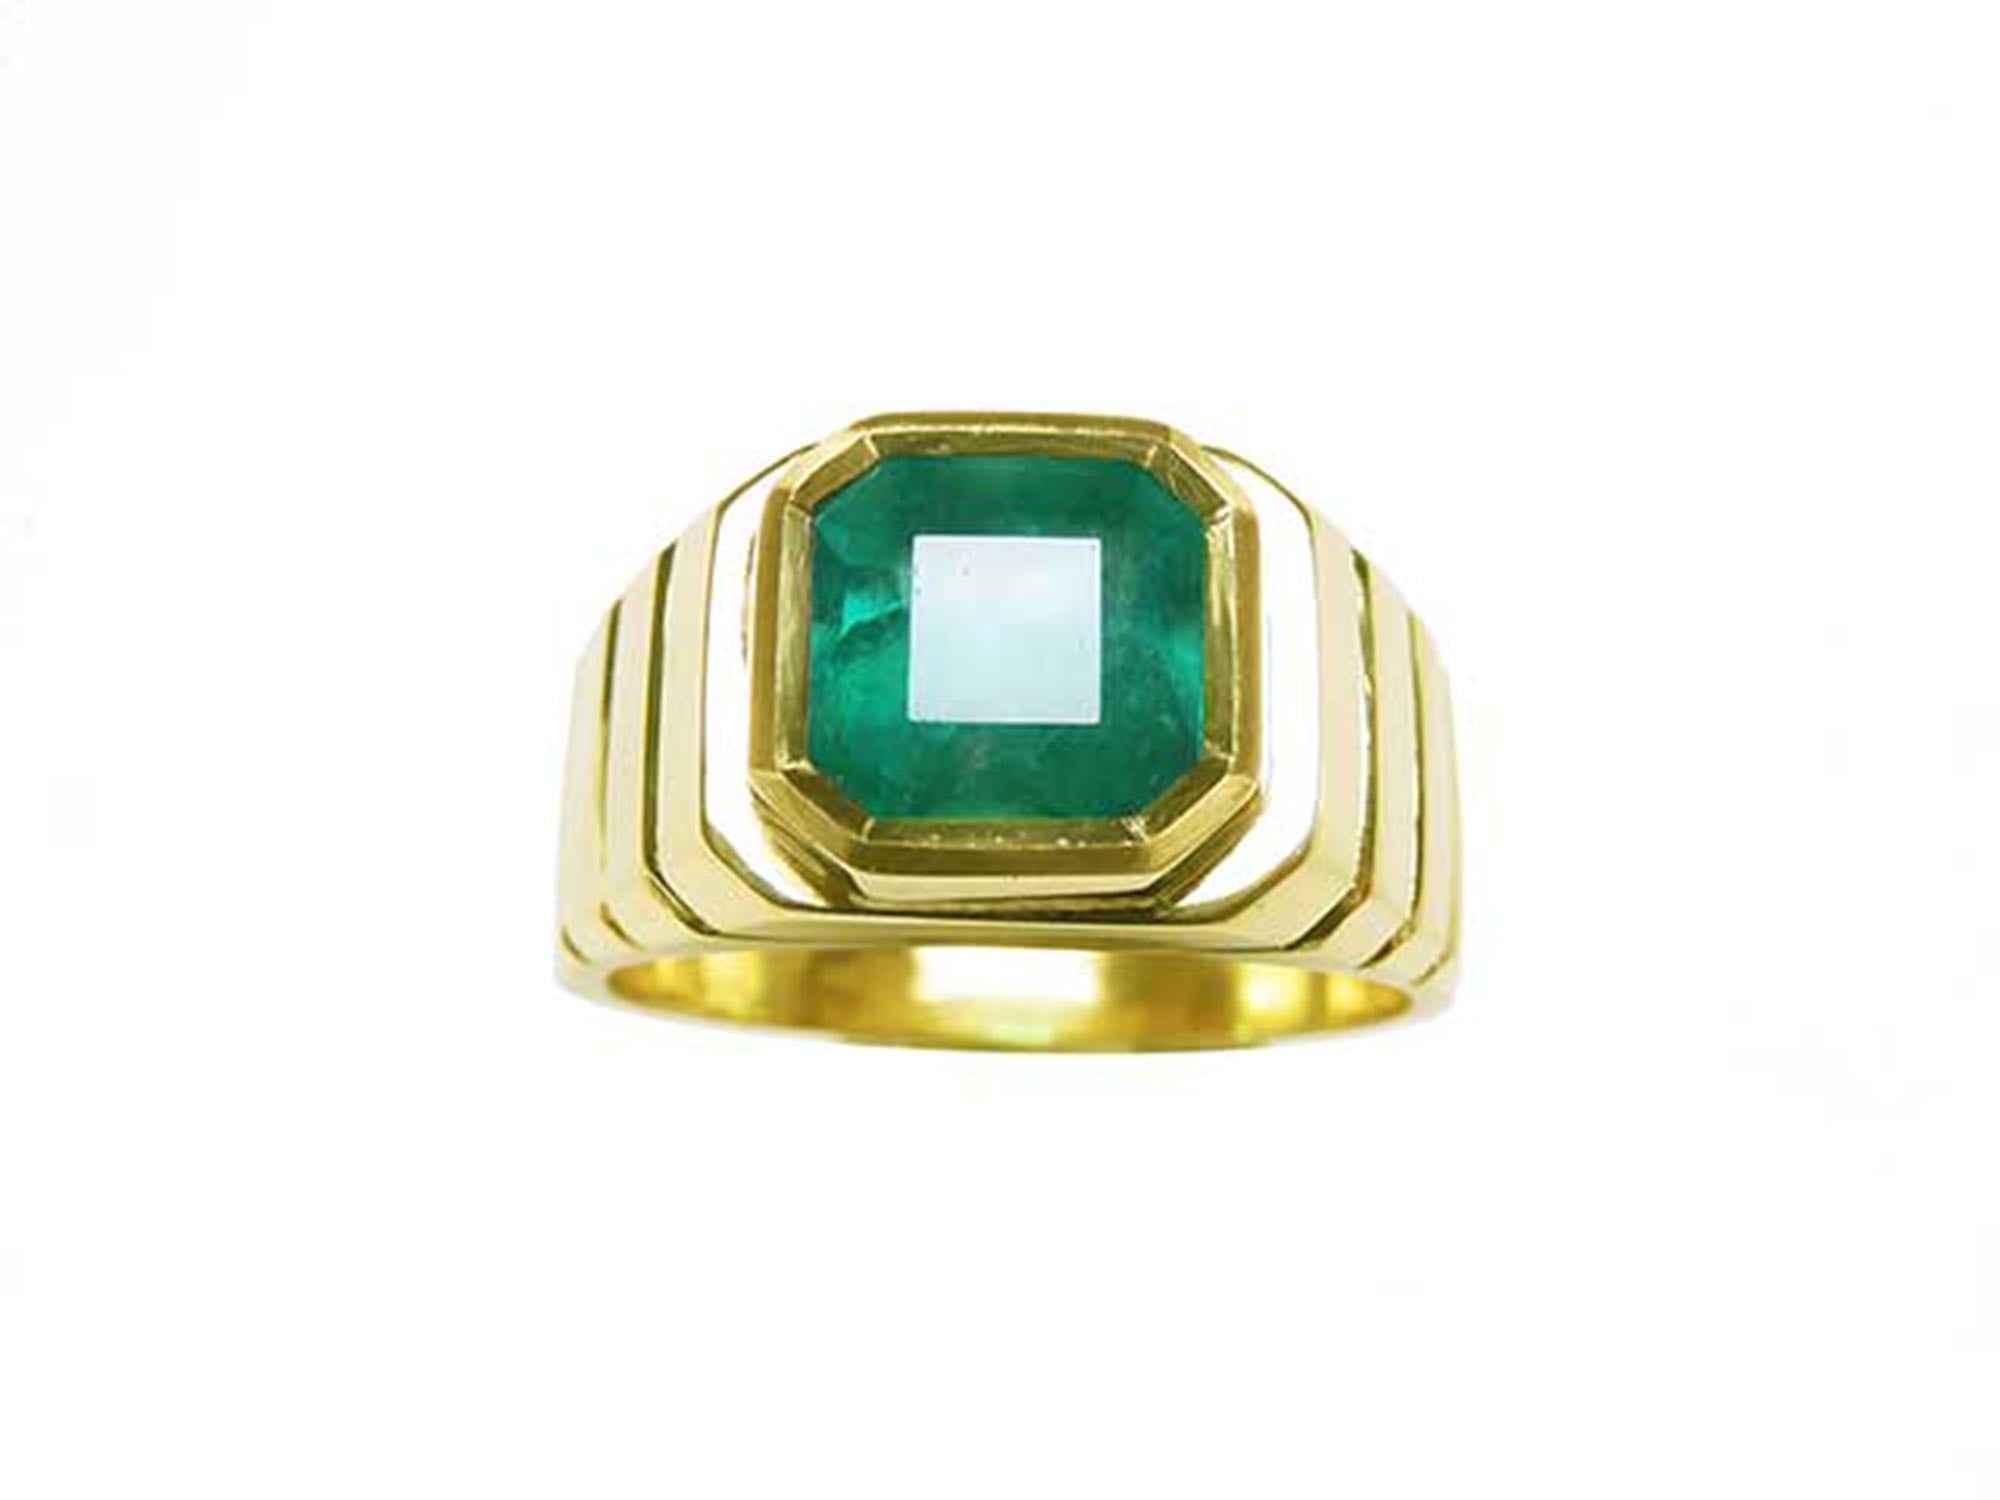 Men's emerald ring